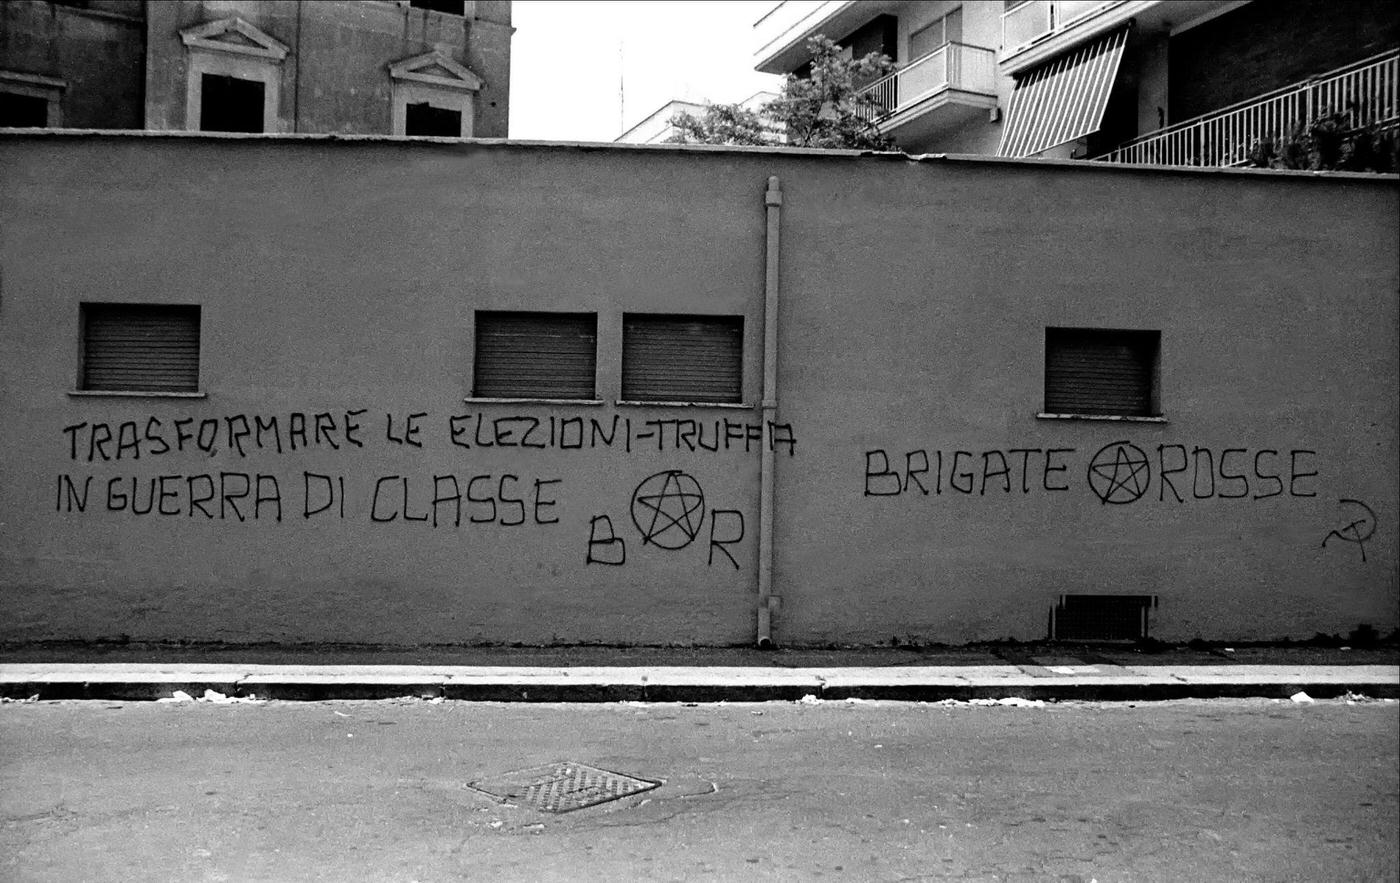 Red Brigades' Inscription Praising Class War in Rome, 1980